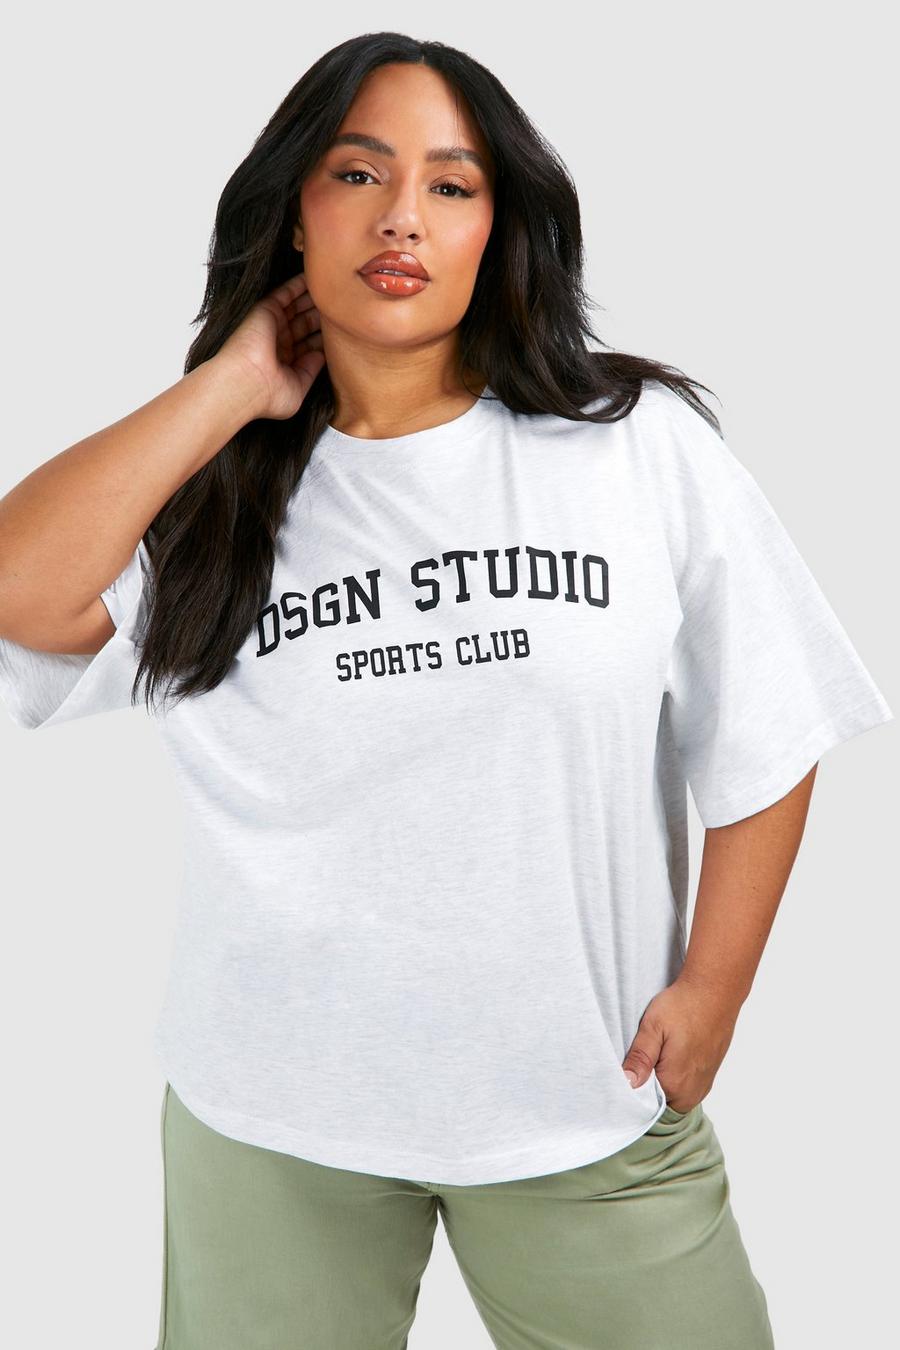 T-shirt Plus Size oversize Dsgn Studio Sports Club, Ash grey